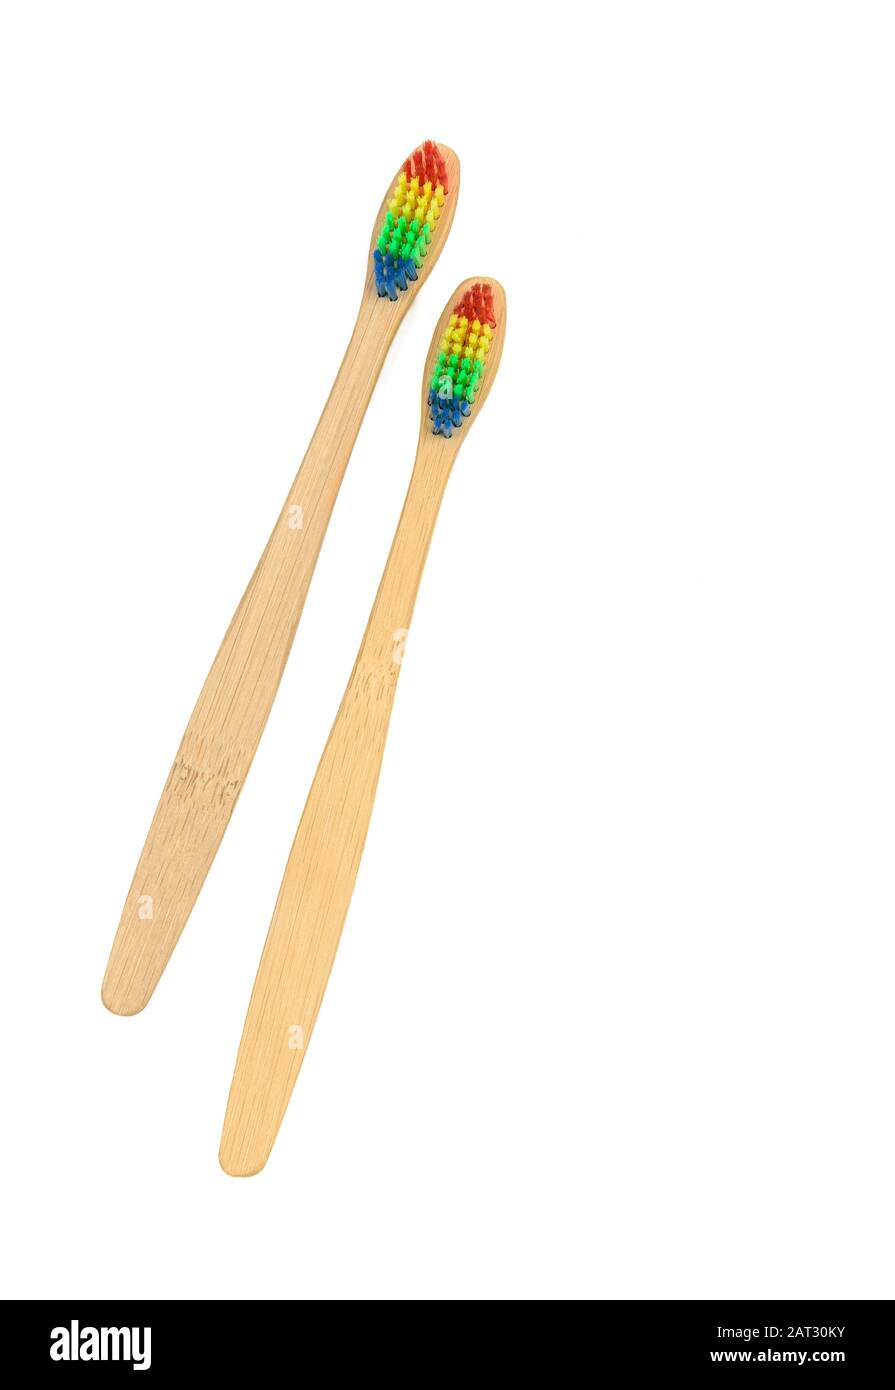 Wooden eco-friendly bamboo teethbrush isolated on white Stock Photo